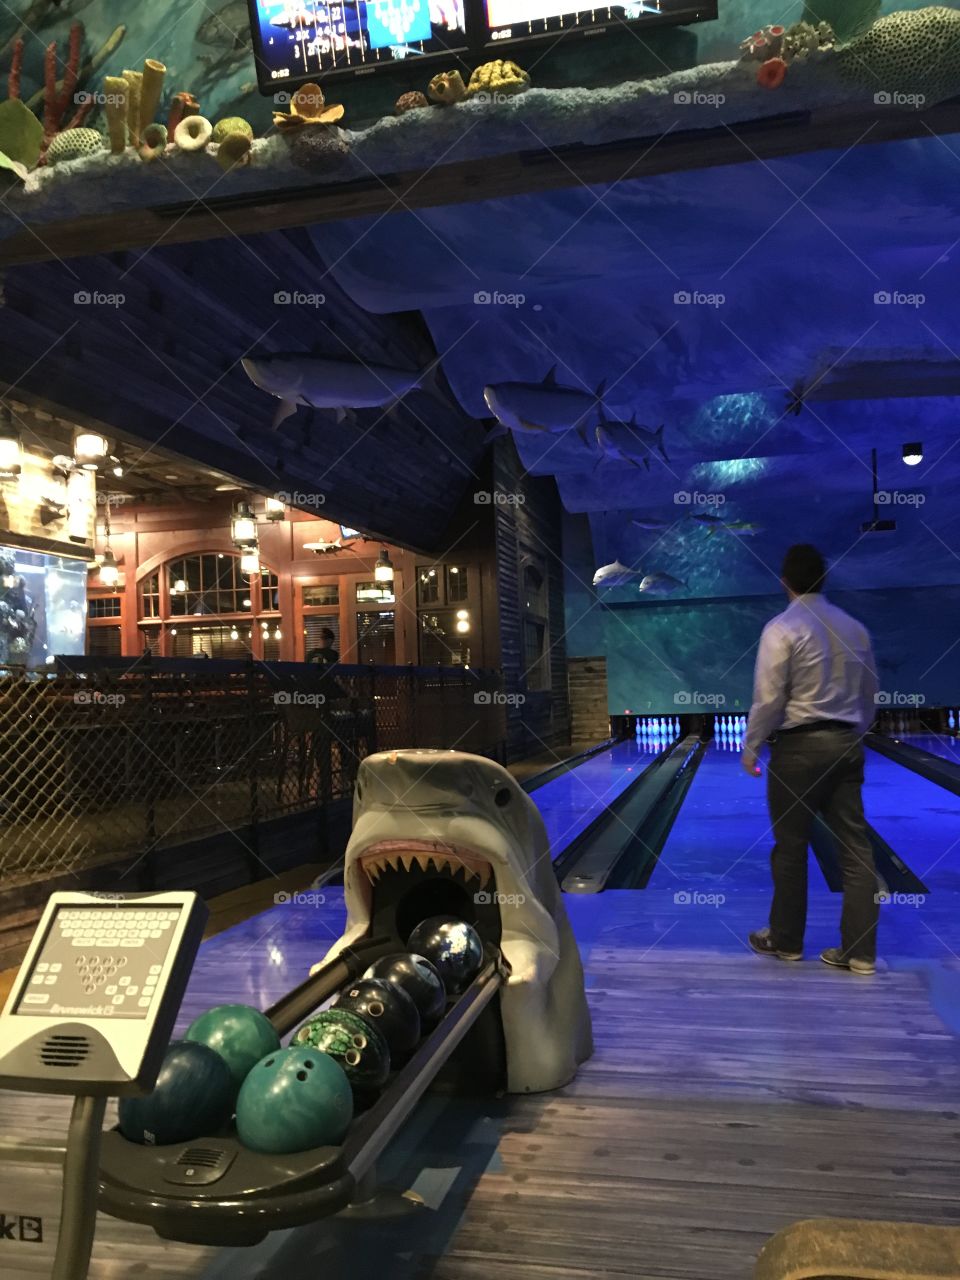 Underwater bowling!